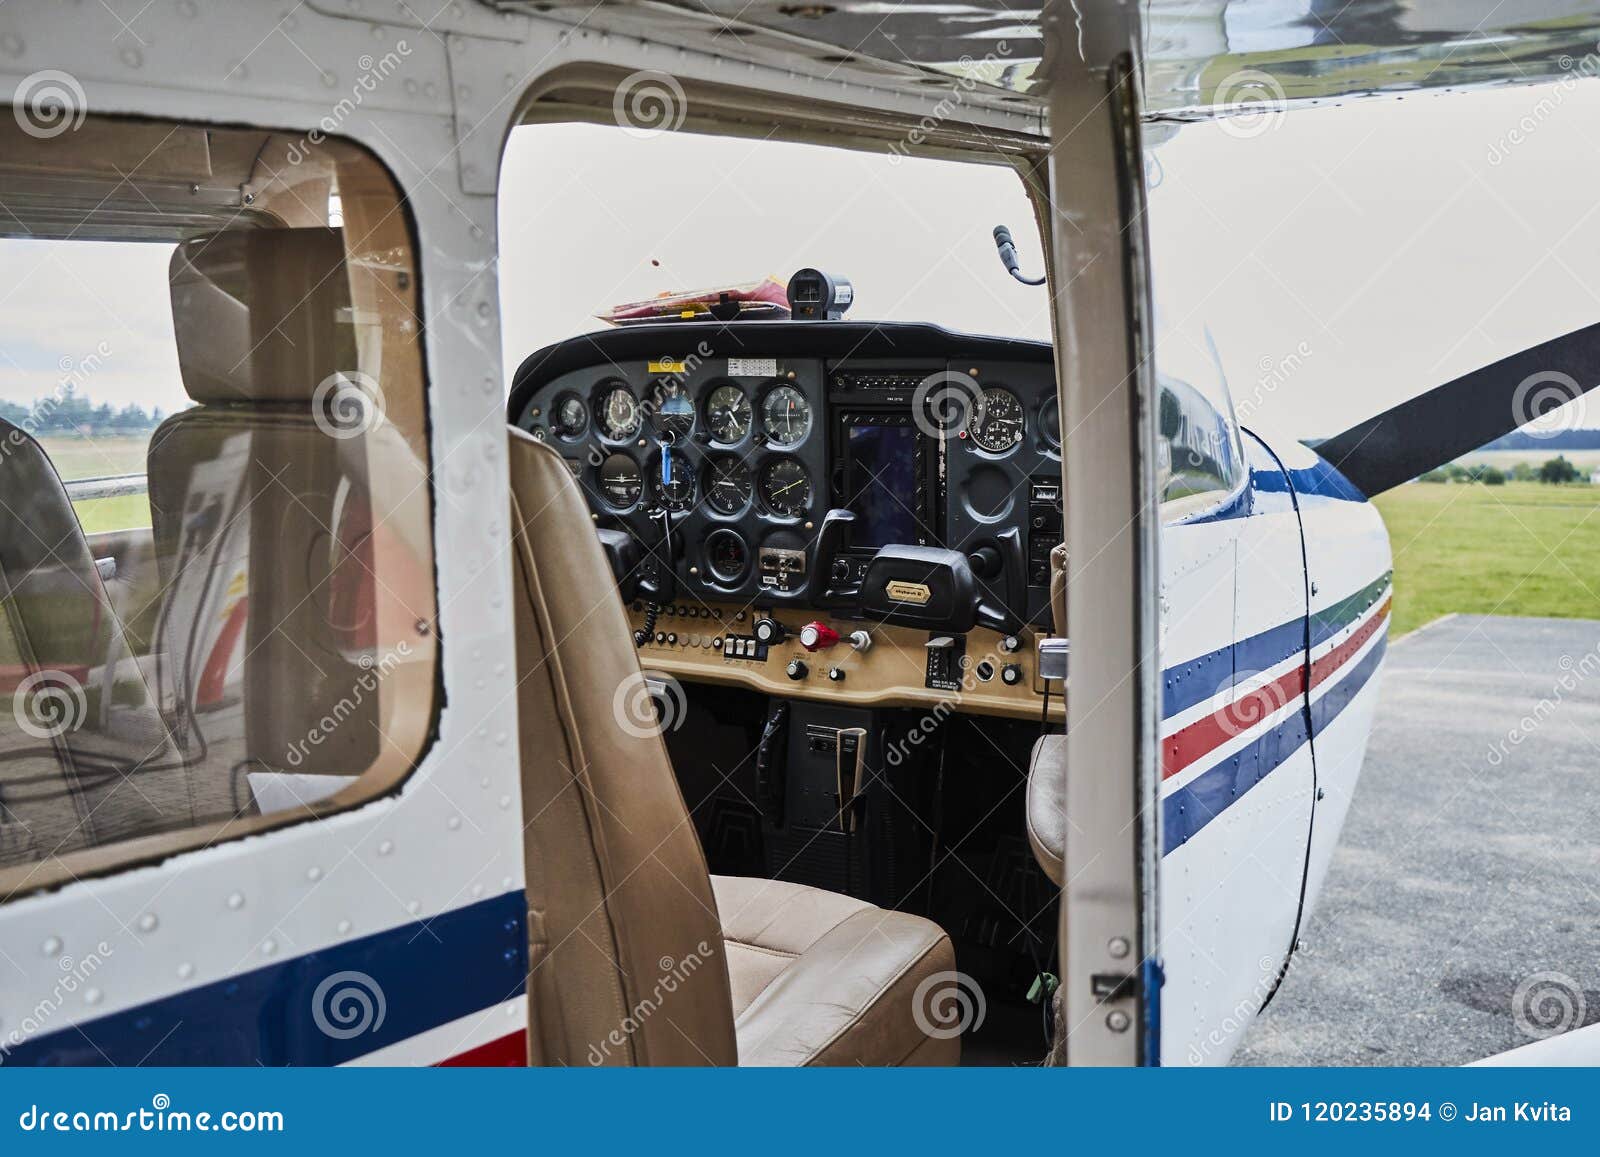 Detailed View Of Cessna 172 Skyhawk 2 Airplane Interior